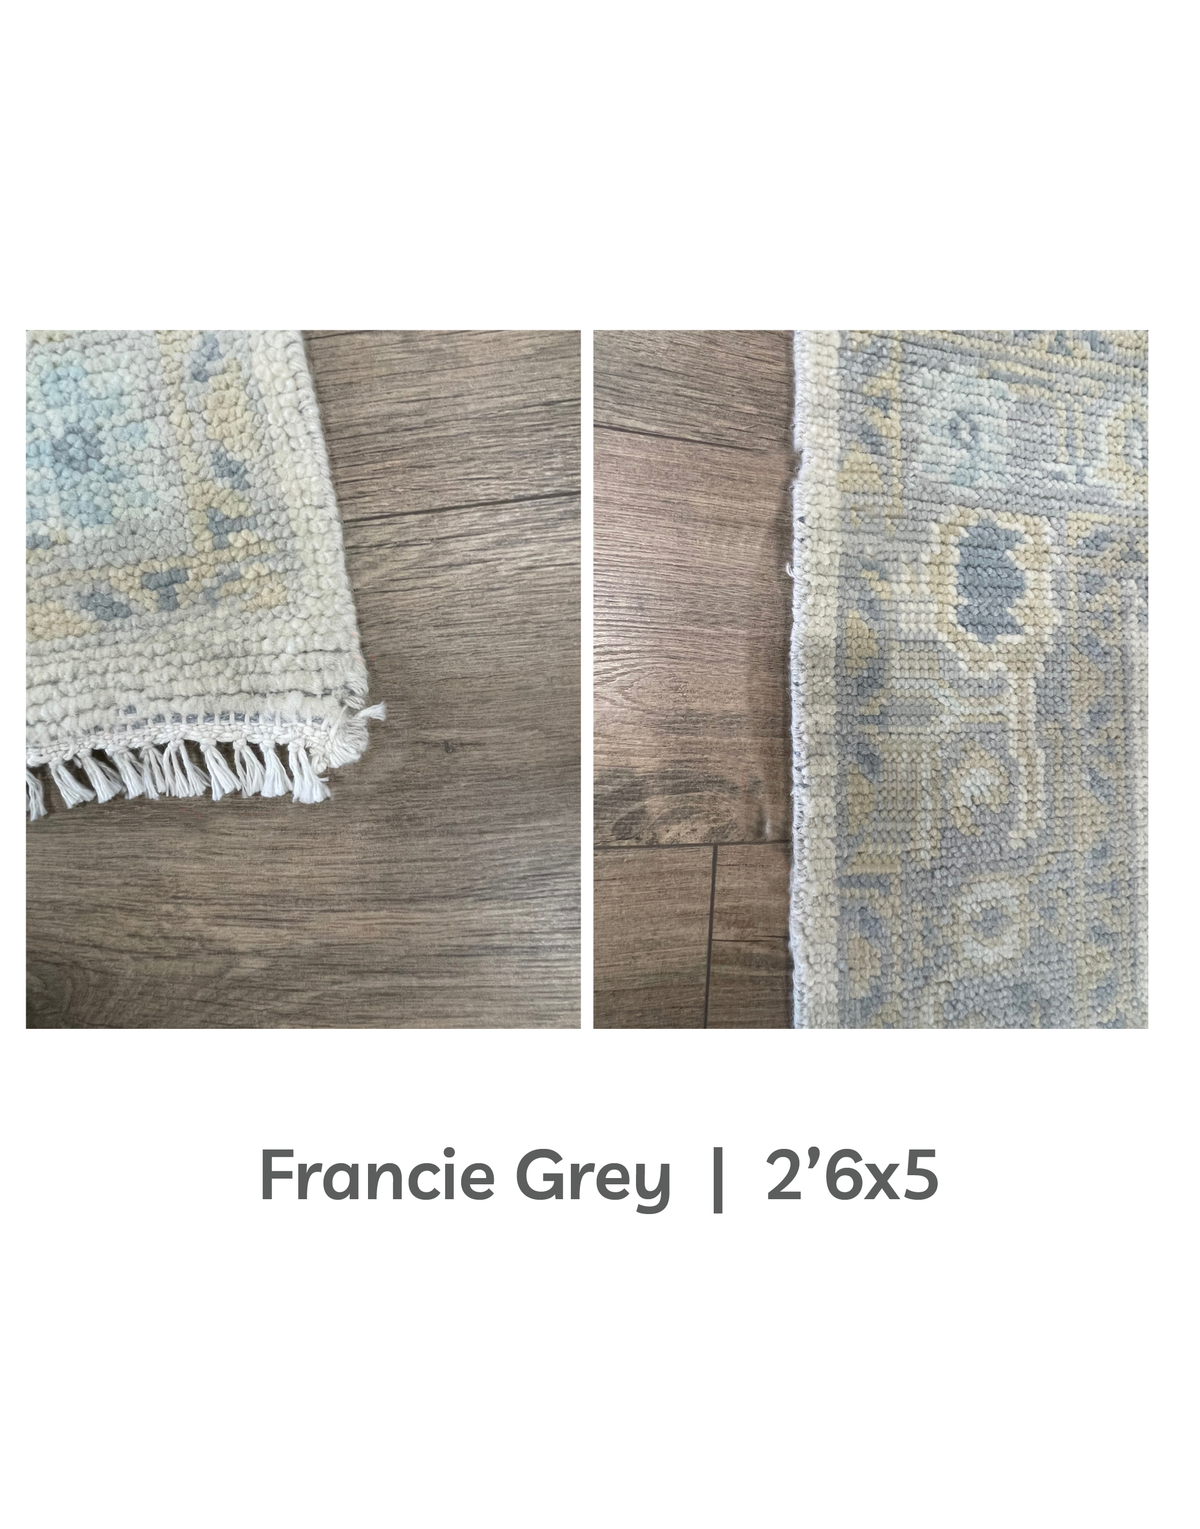 francie grey | final sale